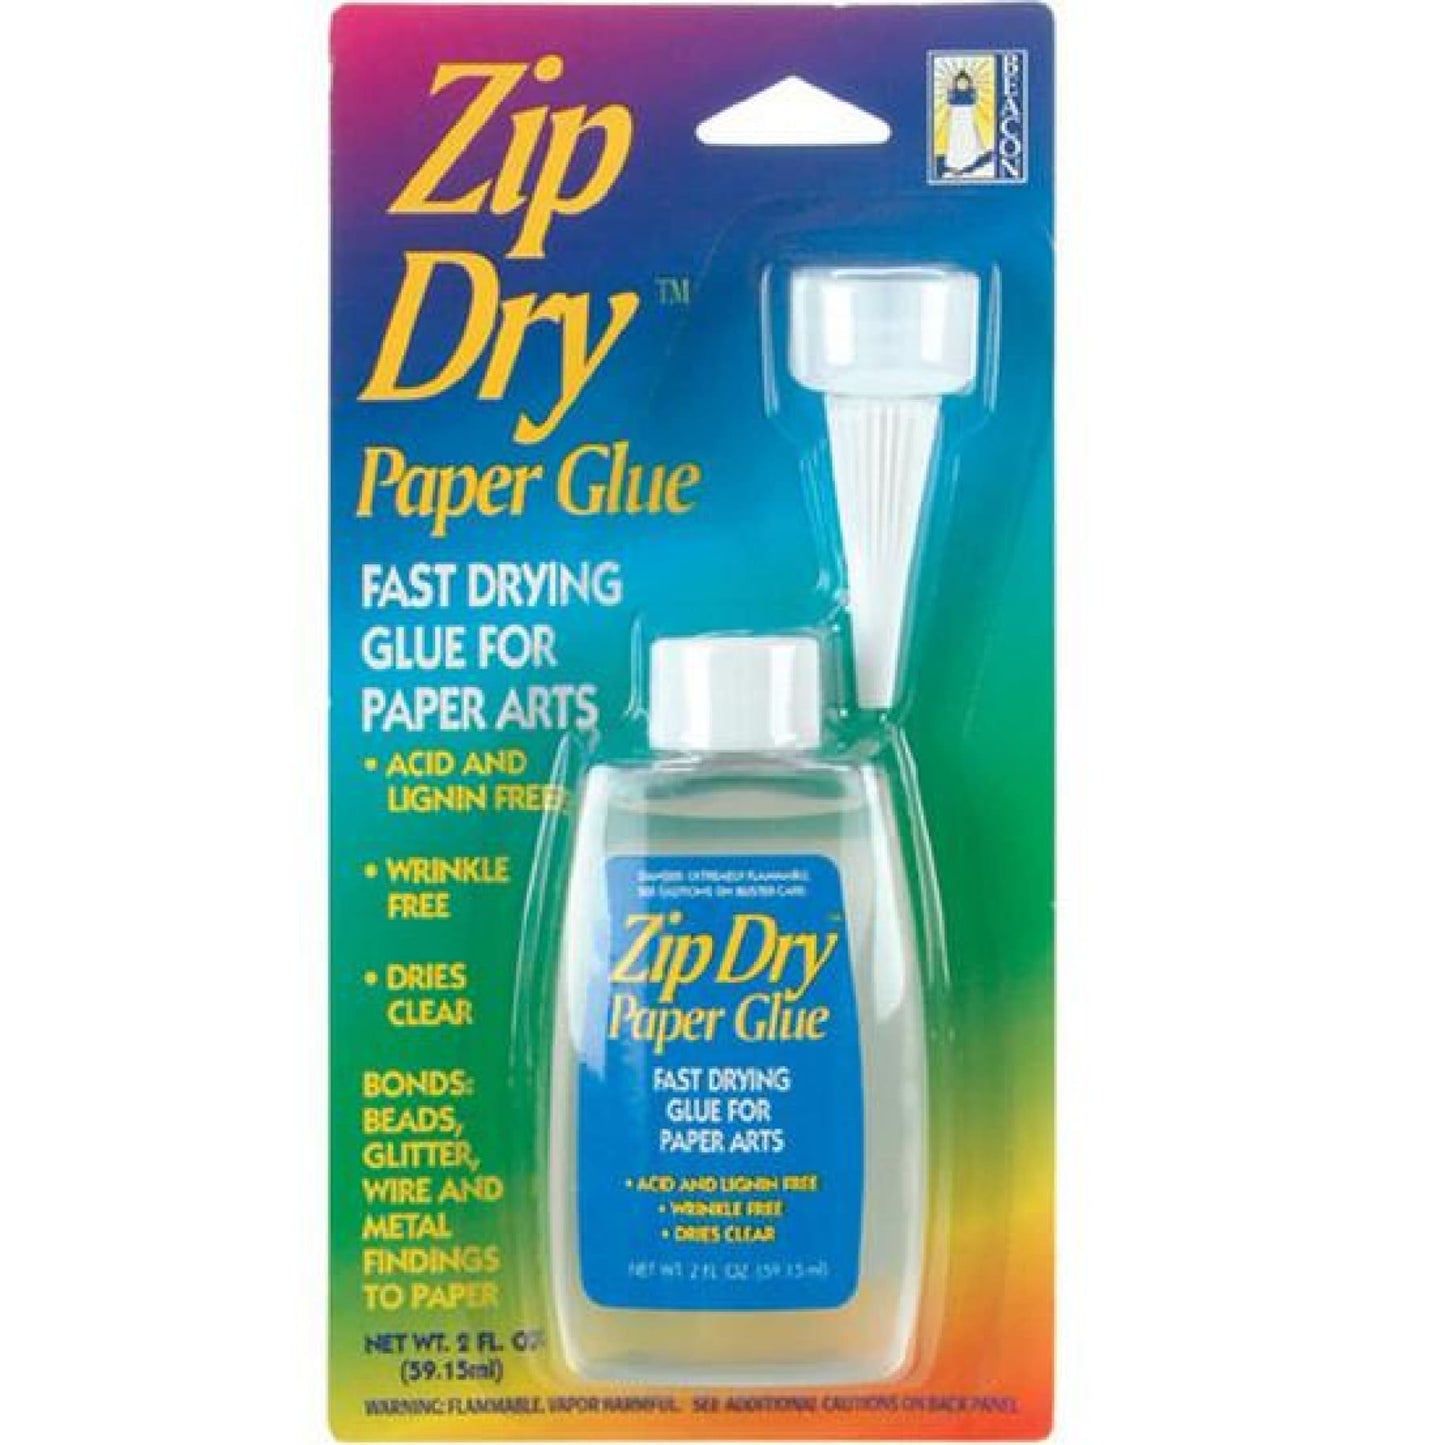 Zip Dry Glue - All That Glitters Invitations